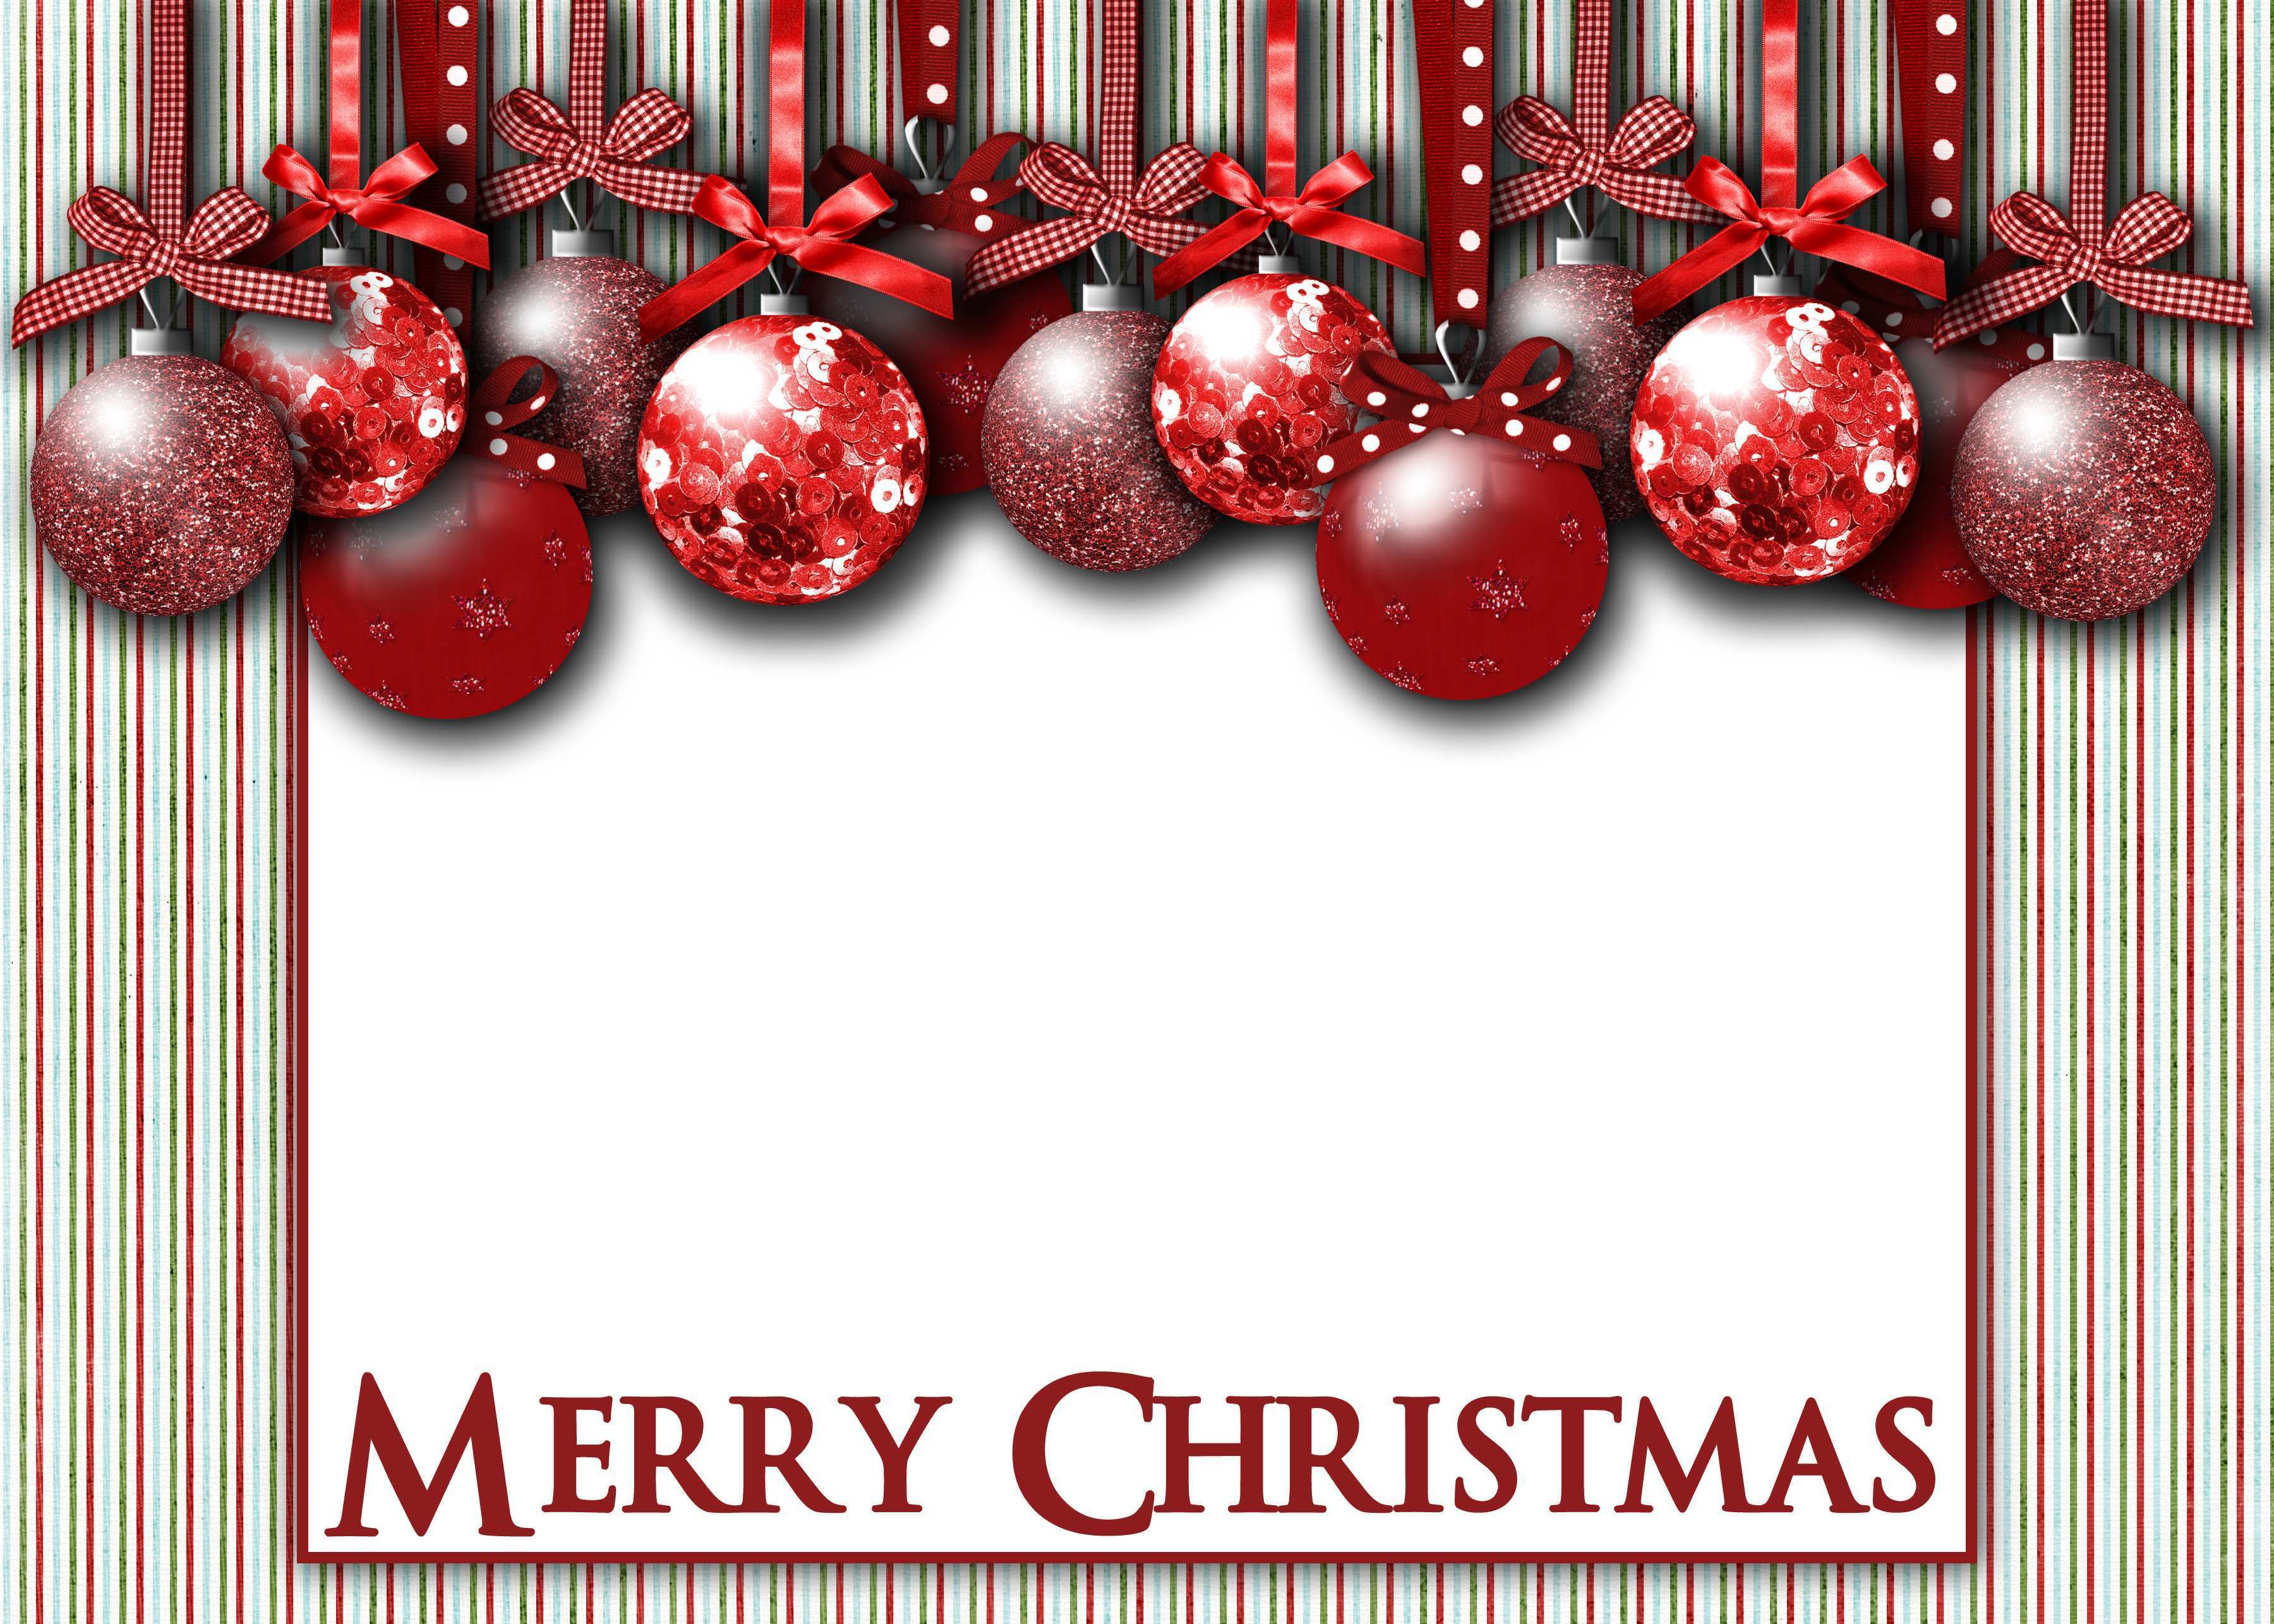 27 Free Printable Christmas Greeting Card Template Psd Psd File By Christmas Greeting Card Template Psd Cards Design Templates